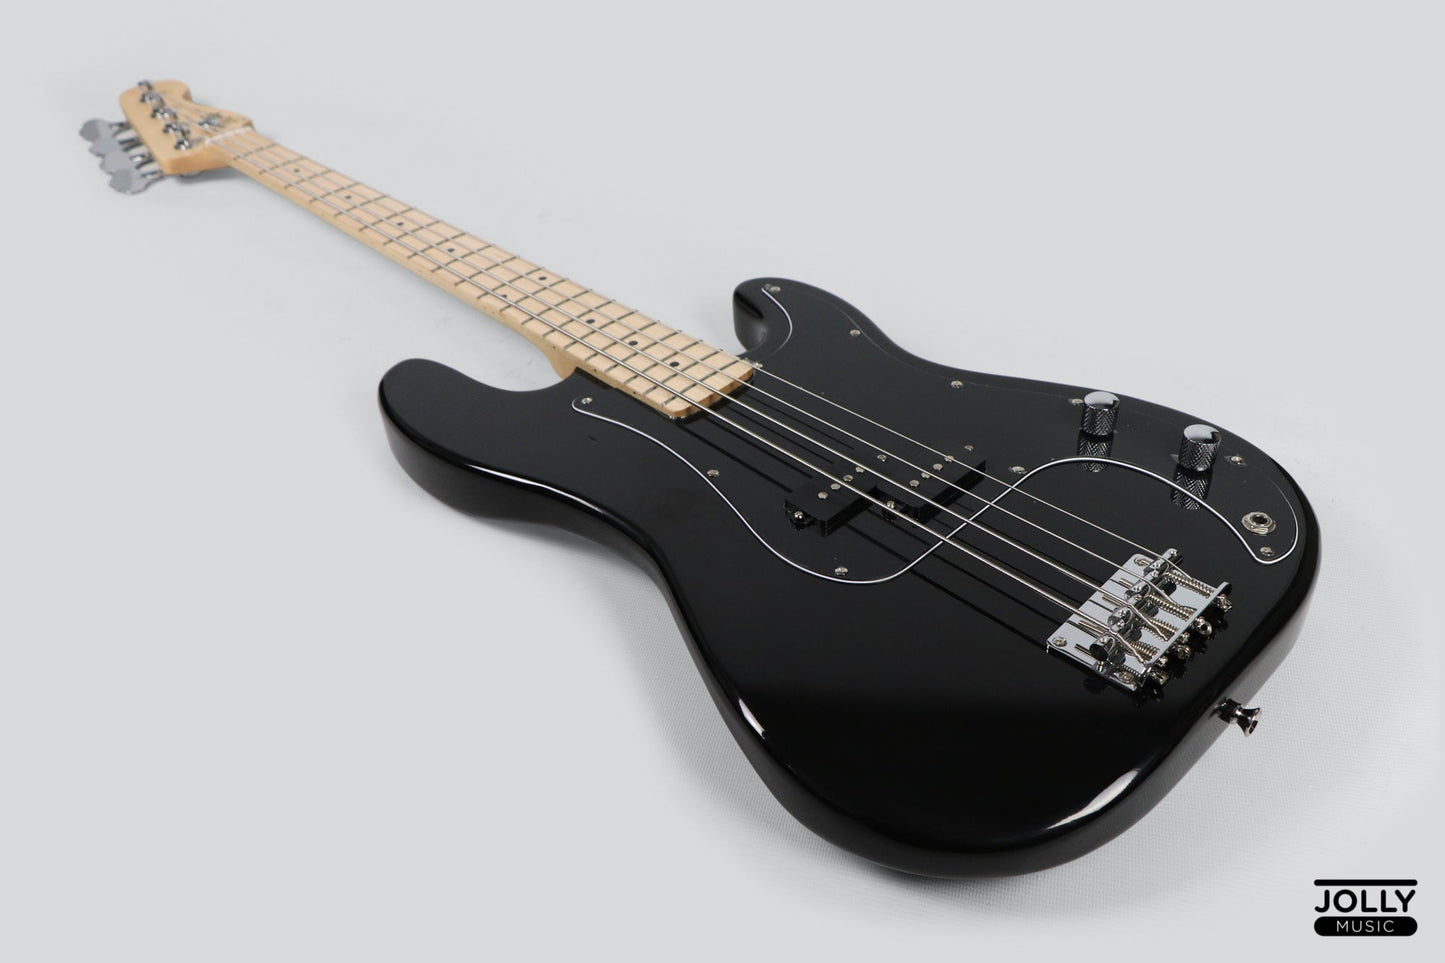 JCraft PB-1 4-String Electric Bass Guitar with Gigbag - Double Black